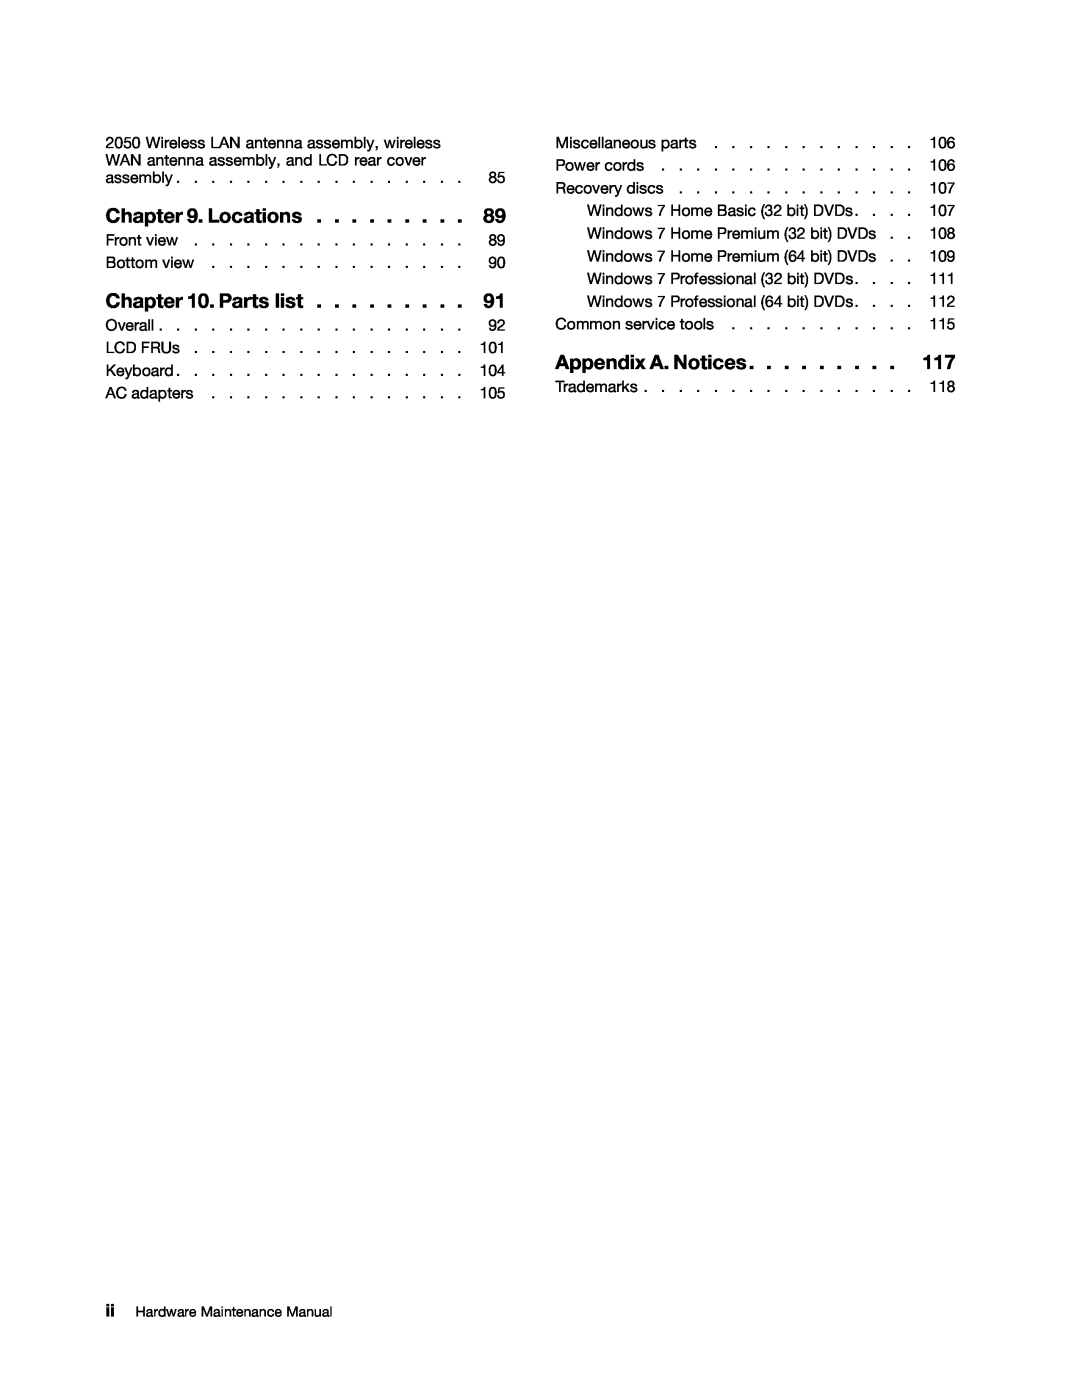 Lenovo E30, E31, EDGE 13 manual Locations, Parts list, Appendix A. Notices, ii Hardware Maintenance Manual 